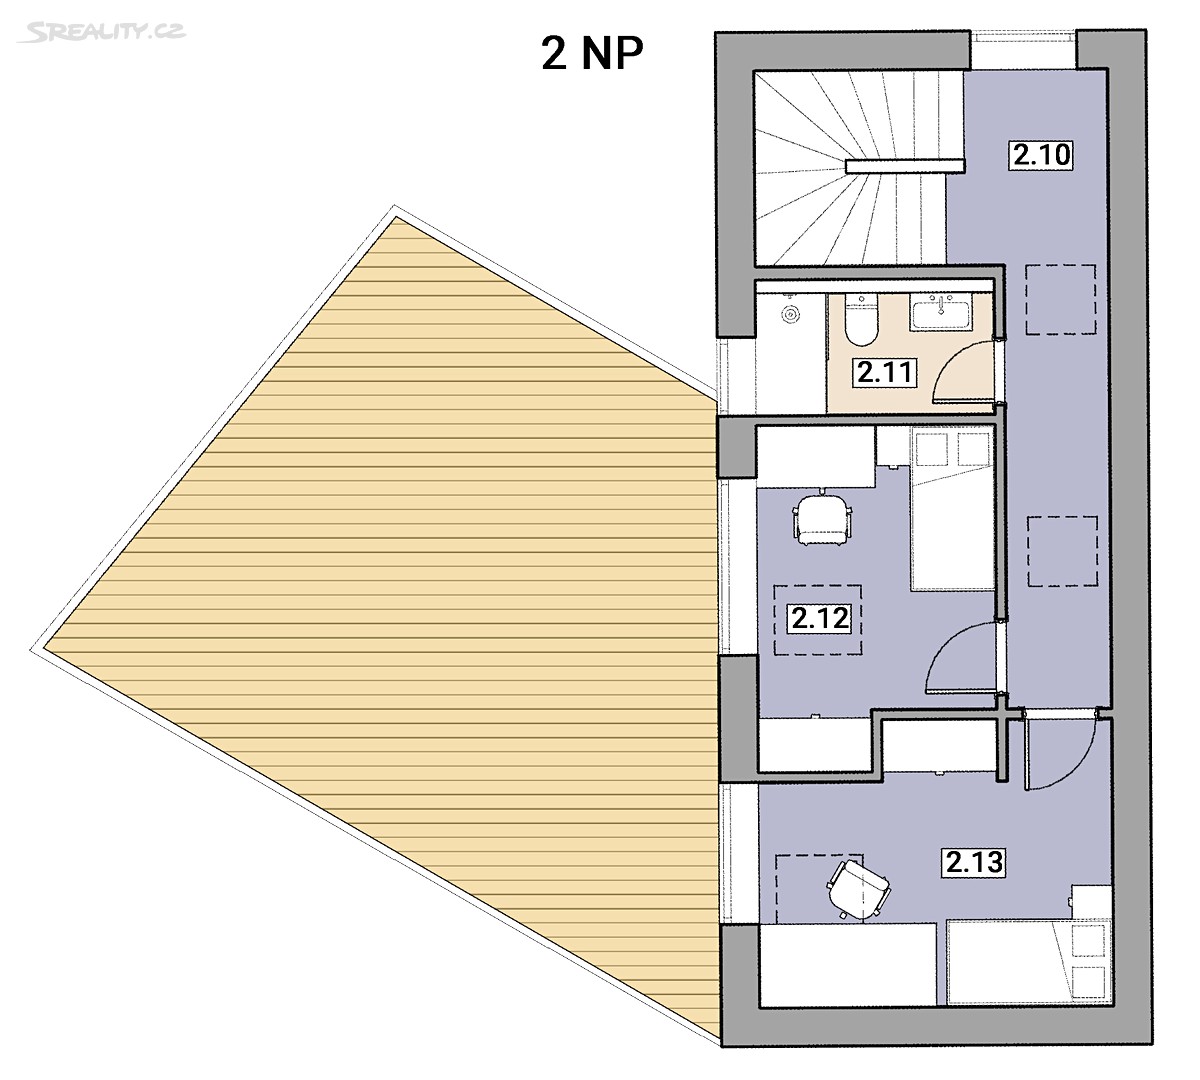 Prodej bytu 4+kk 111 m² (Mezonet), Úžická, Postřižín